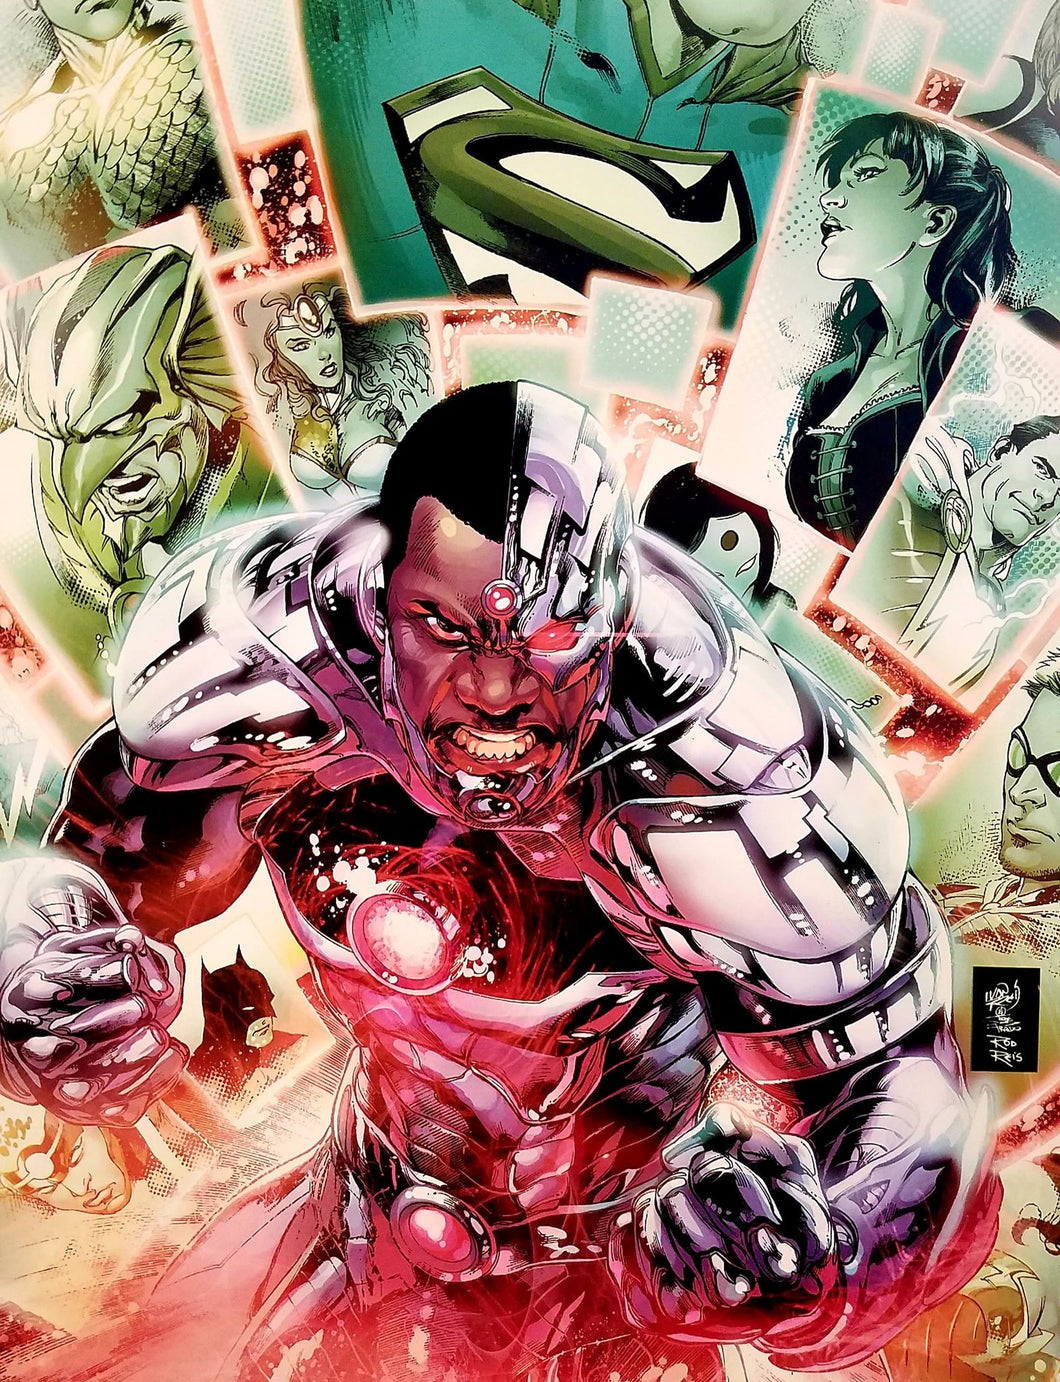 Cyborg Justice League JLA 12x16 FRAMED Art Print by Ivan Reis, New DC Comics